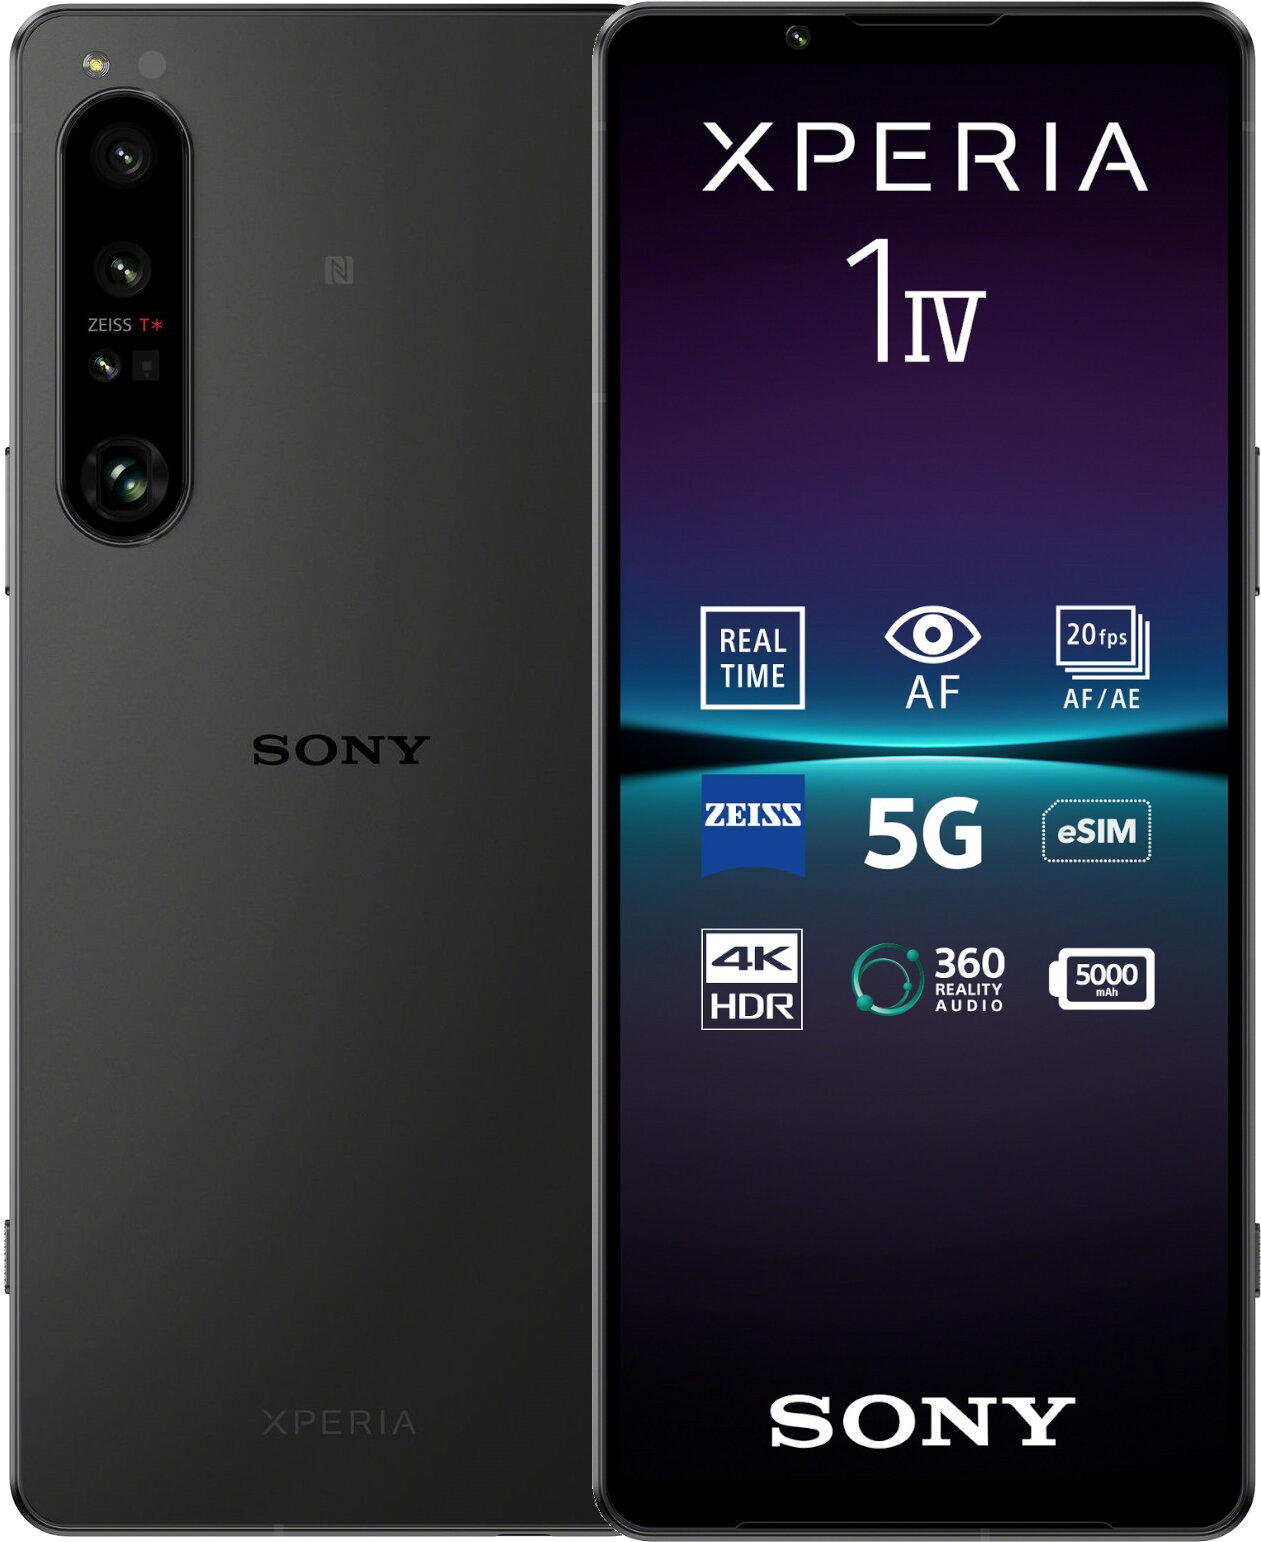 Sony Xperia IV Smartphone Pantalla OLED 4K HDR De 120 Hz,Zoom óptico Real  (ZEISS T),Audio De Mm,Android 12, SIM Libre 12 GB De RAM 256 GB |  iprayas.org